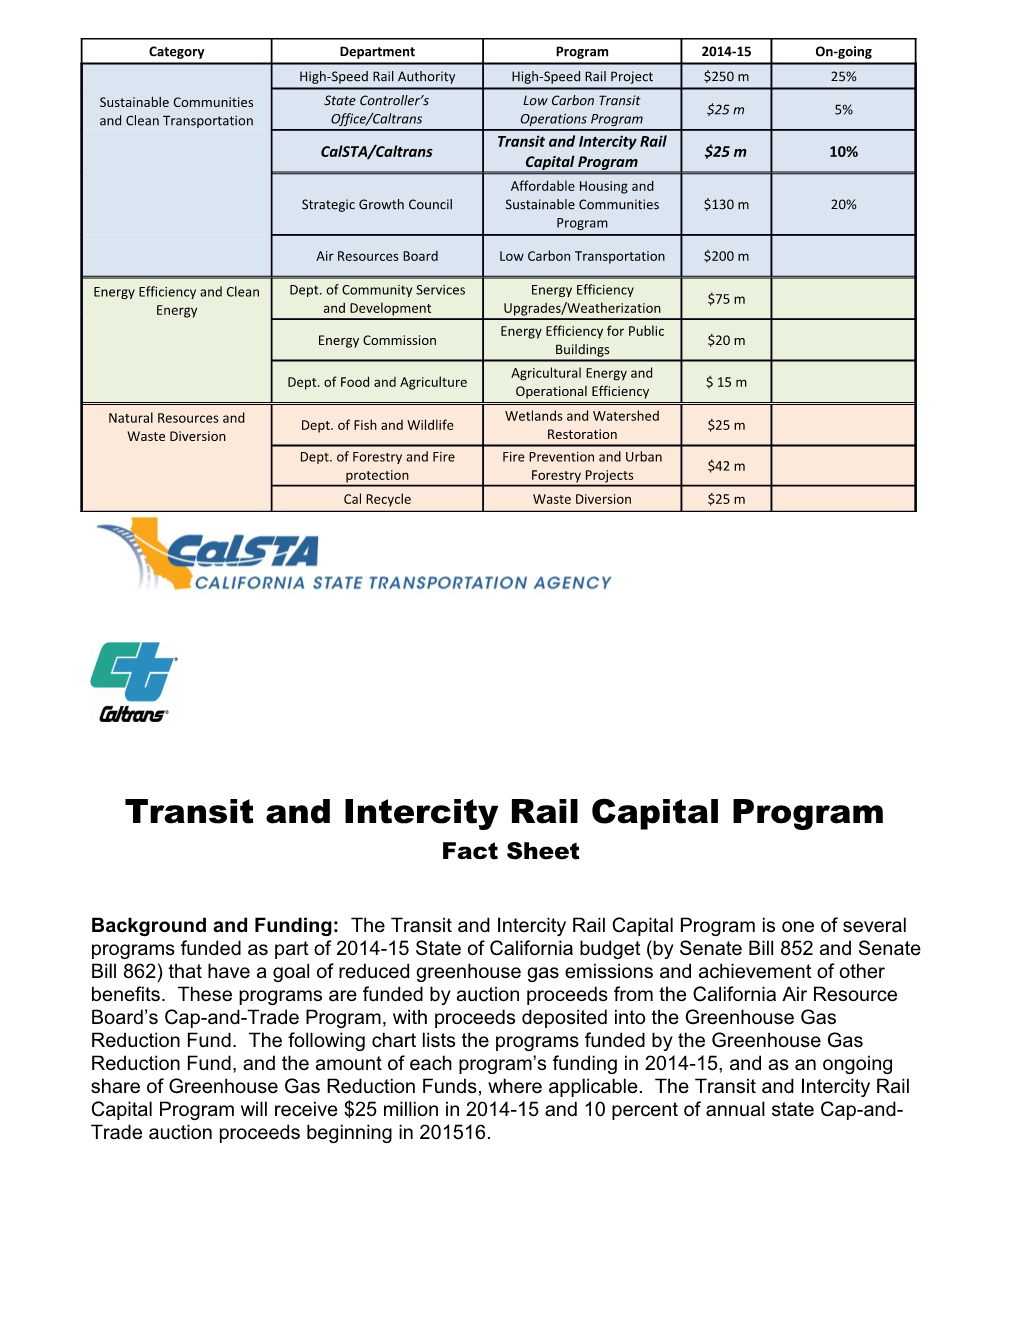 Transit and Intercity Rail Capital Program